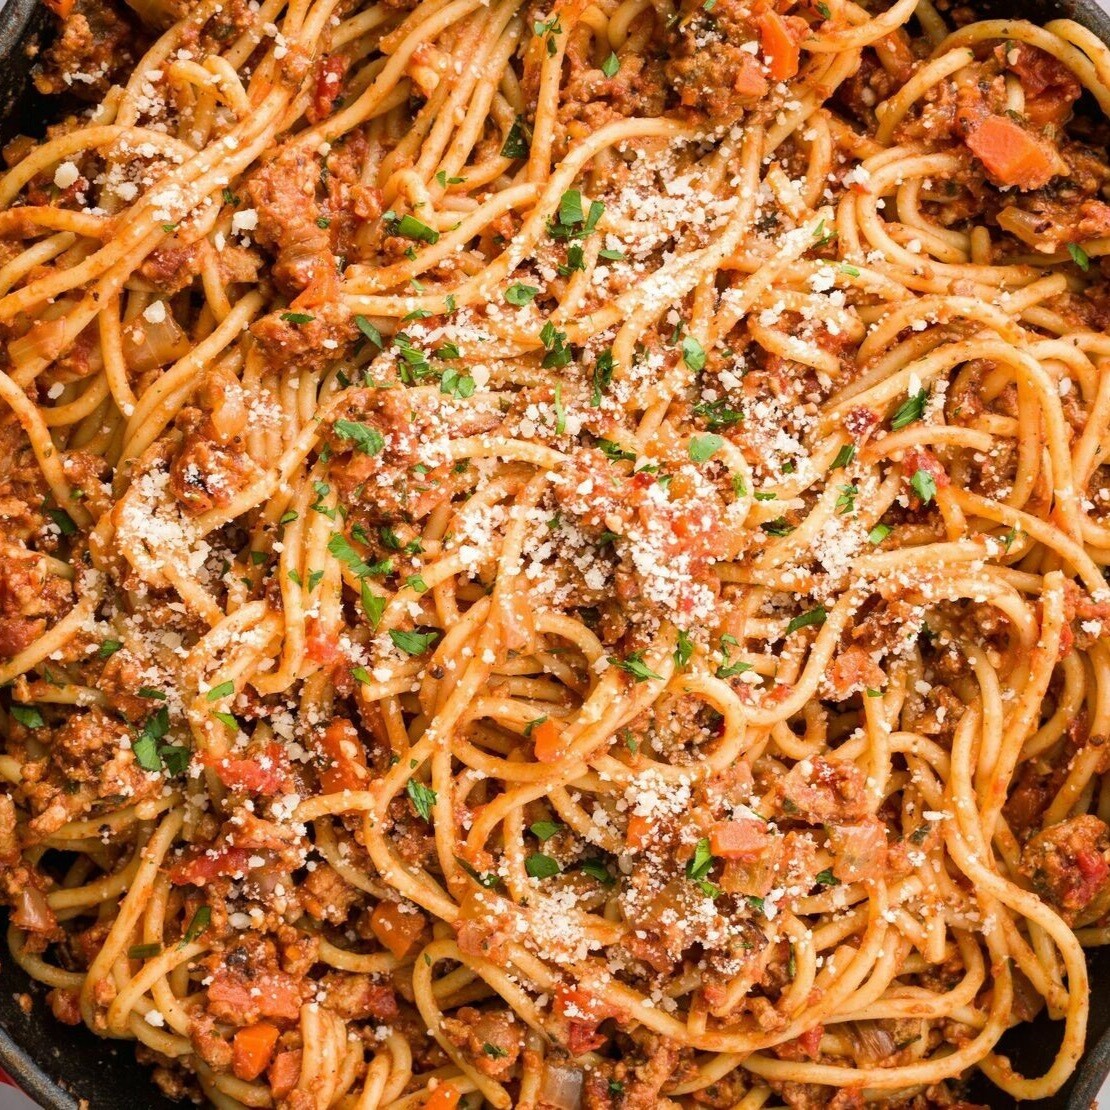 Whole Wheat Spaghetti With Ground Turkey